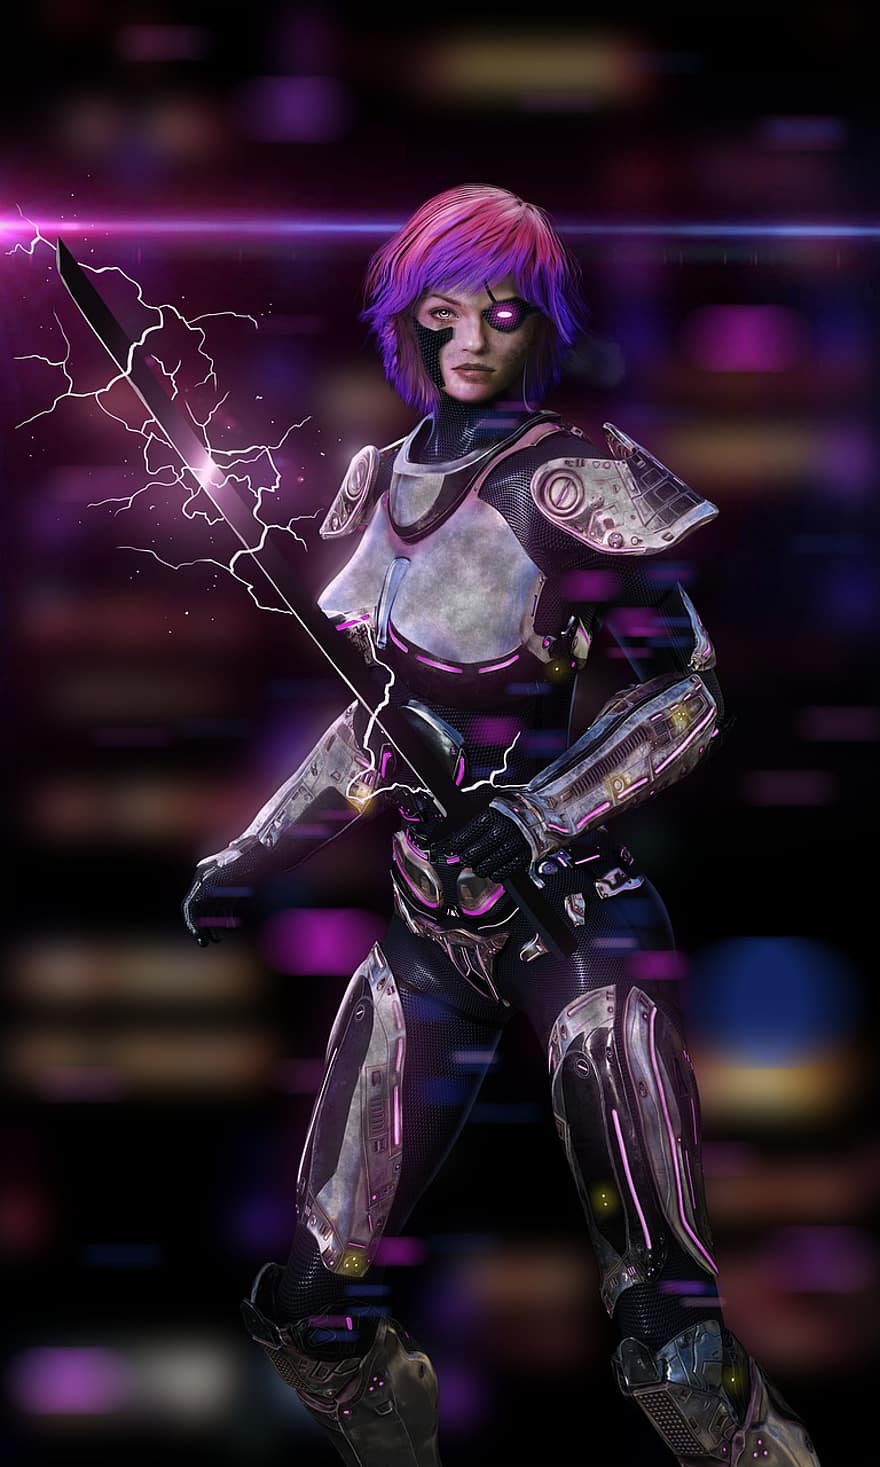 Robot, Cyborg, Sword, Woman, Futuristic, Sci-fi, Artificial, Machine, Technology, Fantasy